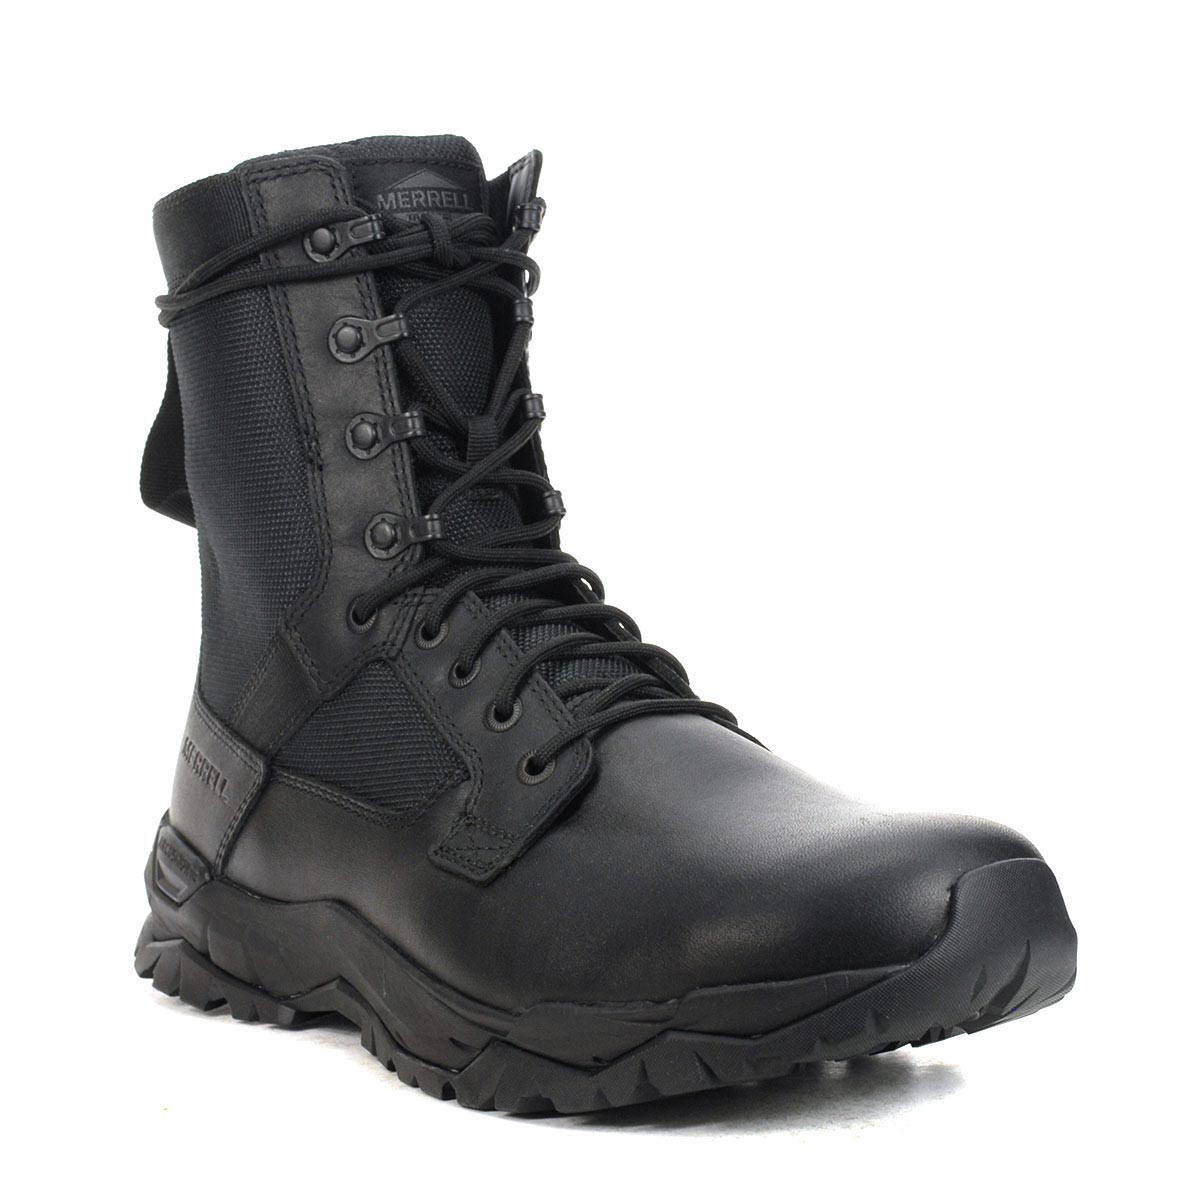 Merrell Men's MQC Patrol Zip Black Waterproof Tactical Boots - WOOKI.COM